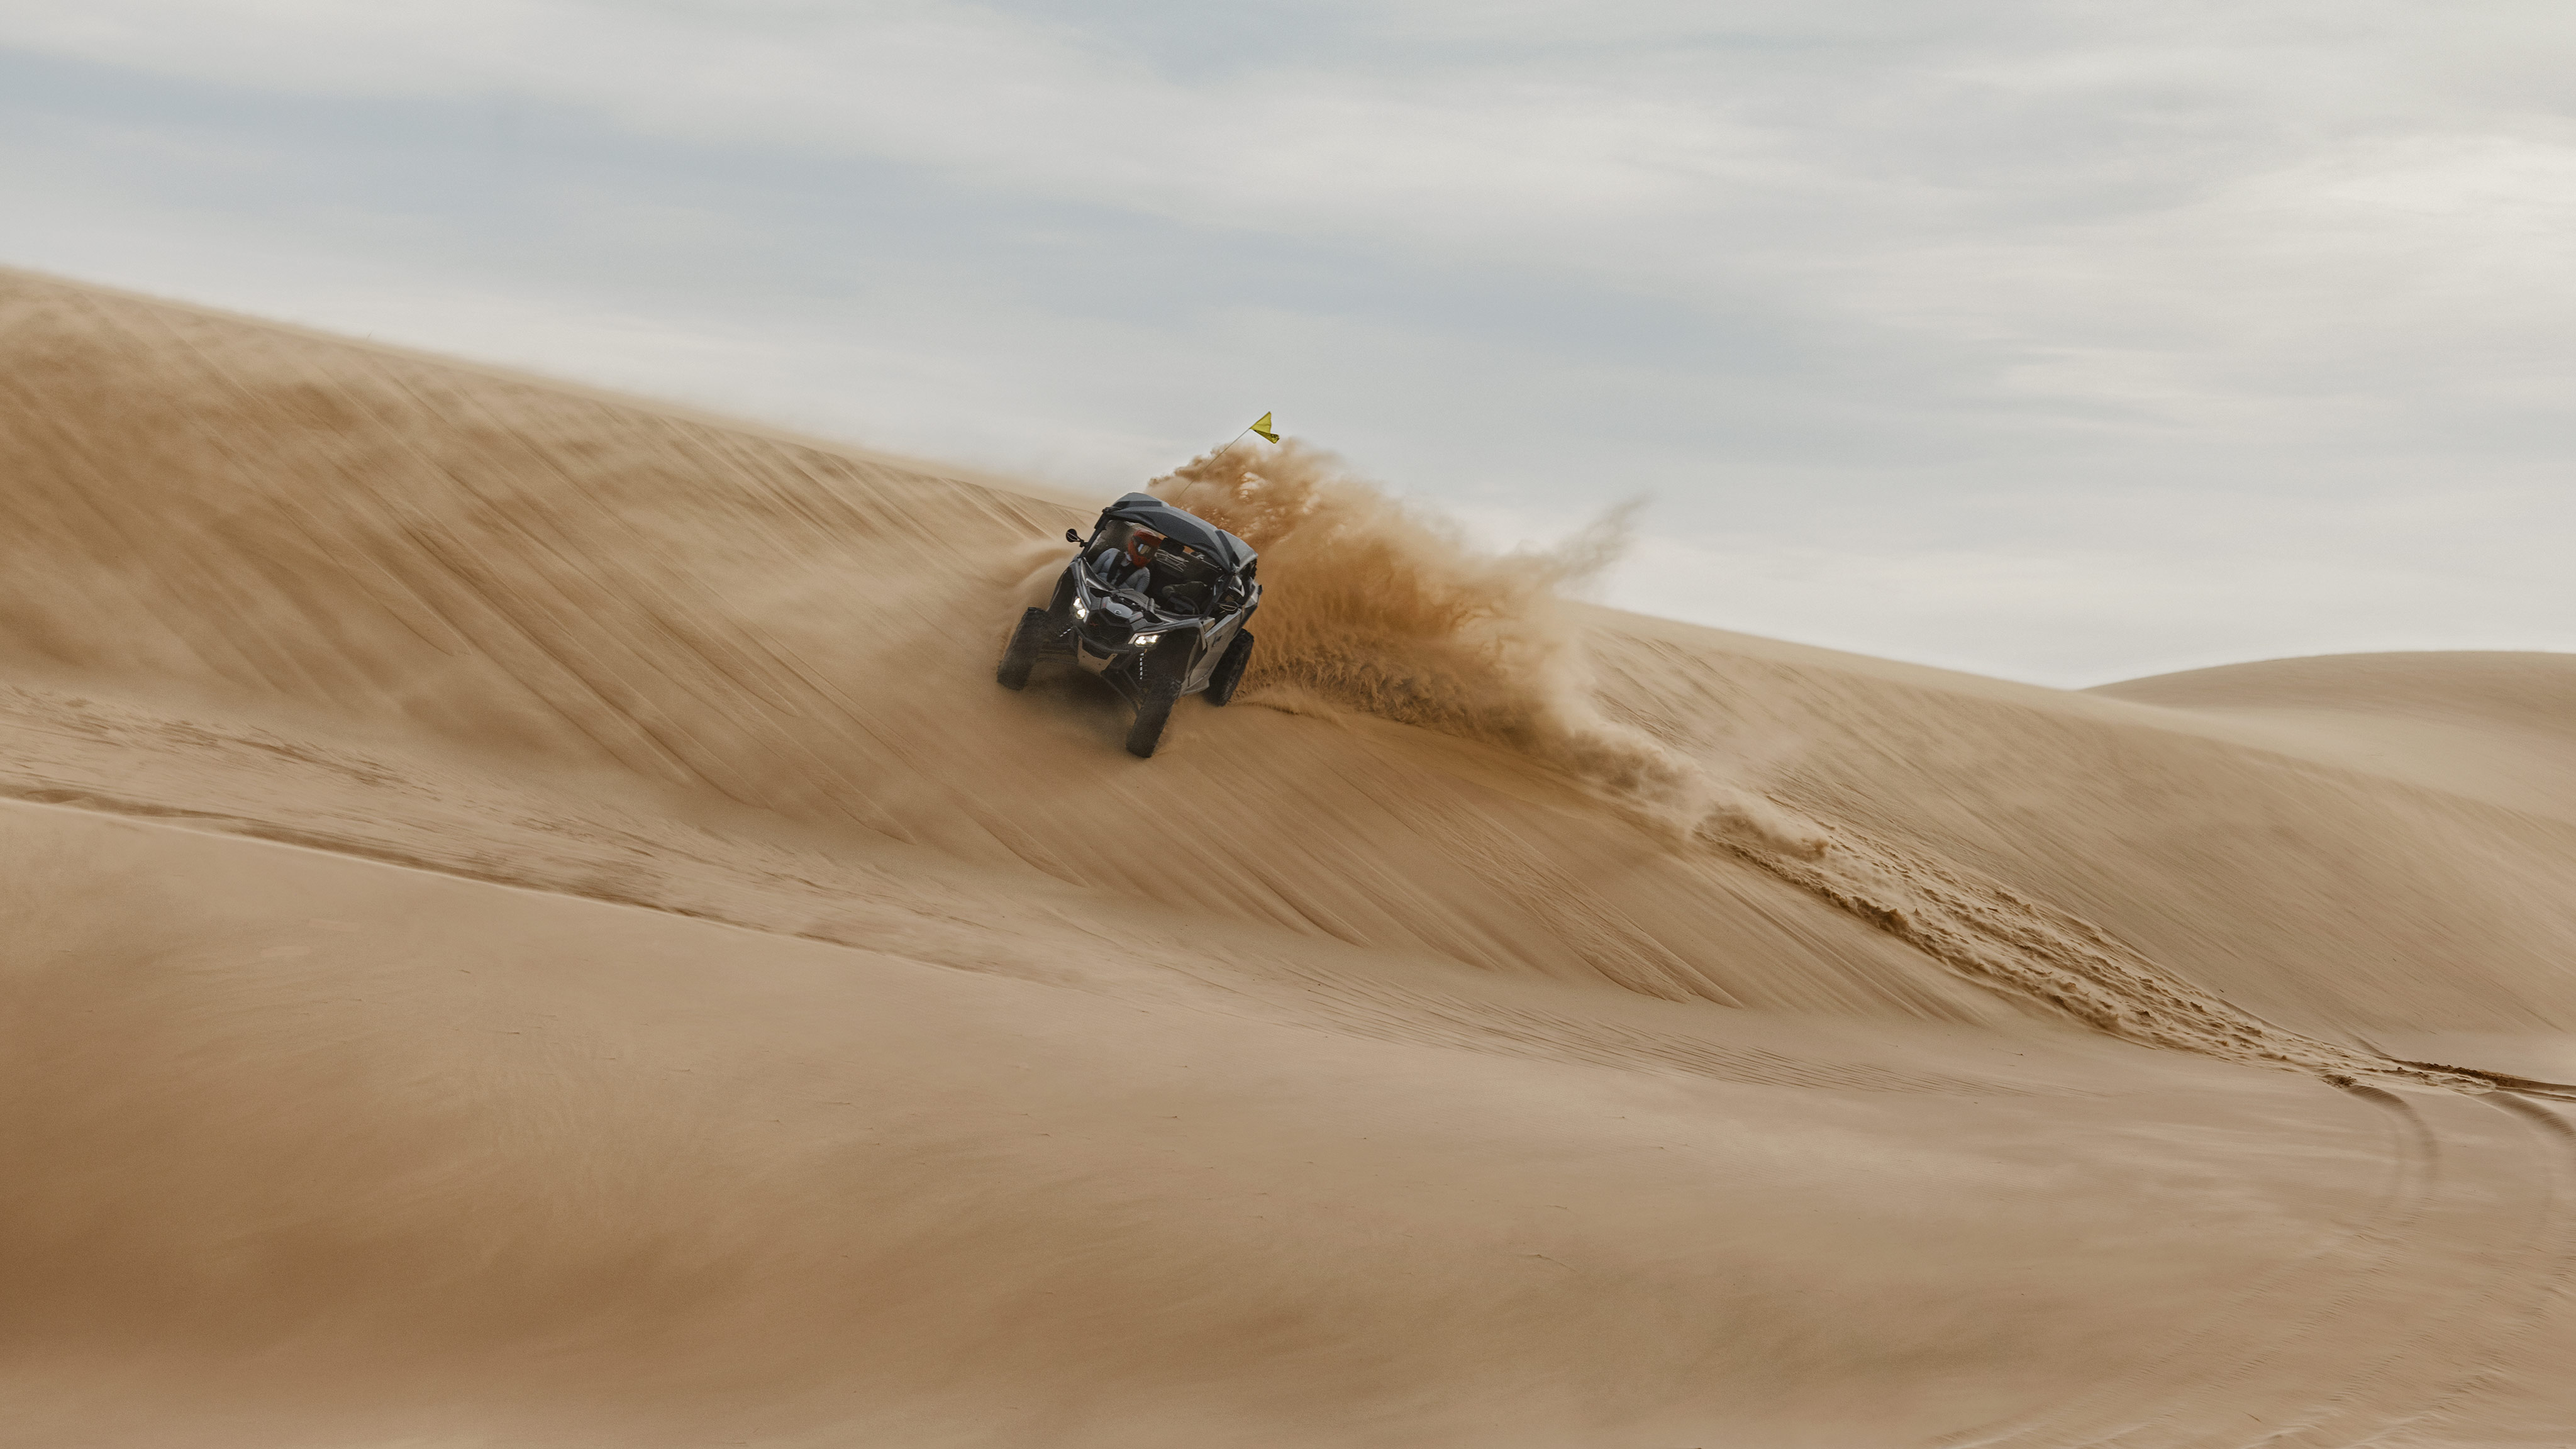 Maverick X3 X DS Turbo RR riding full speed in sand dunes